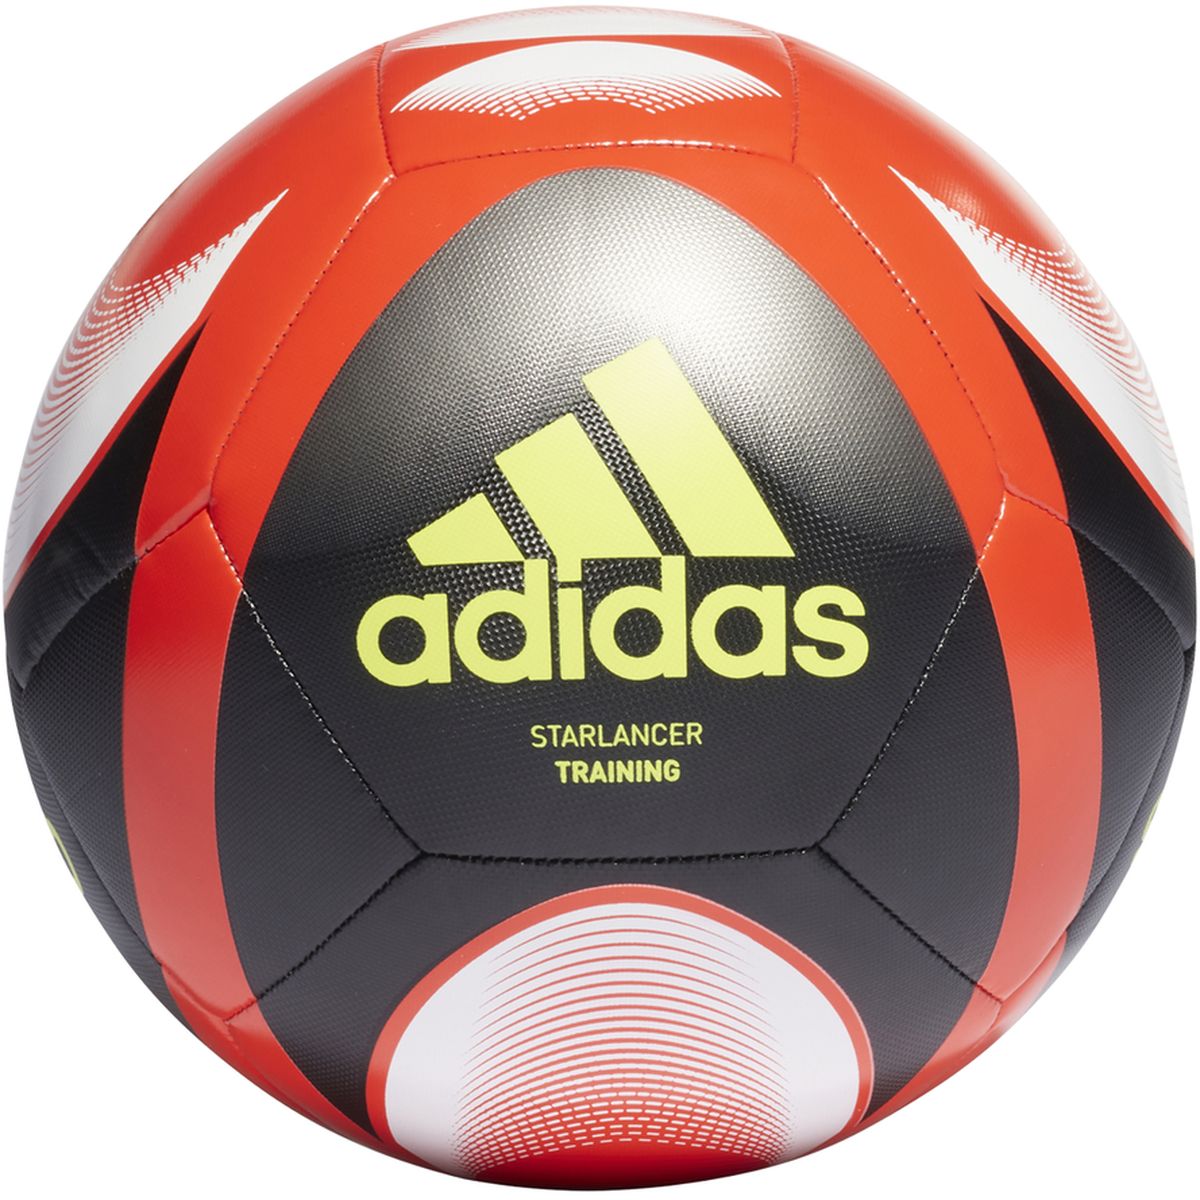 Adidas Starlancer Trainingsball Herren